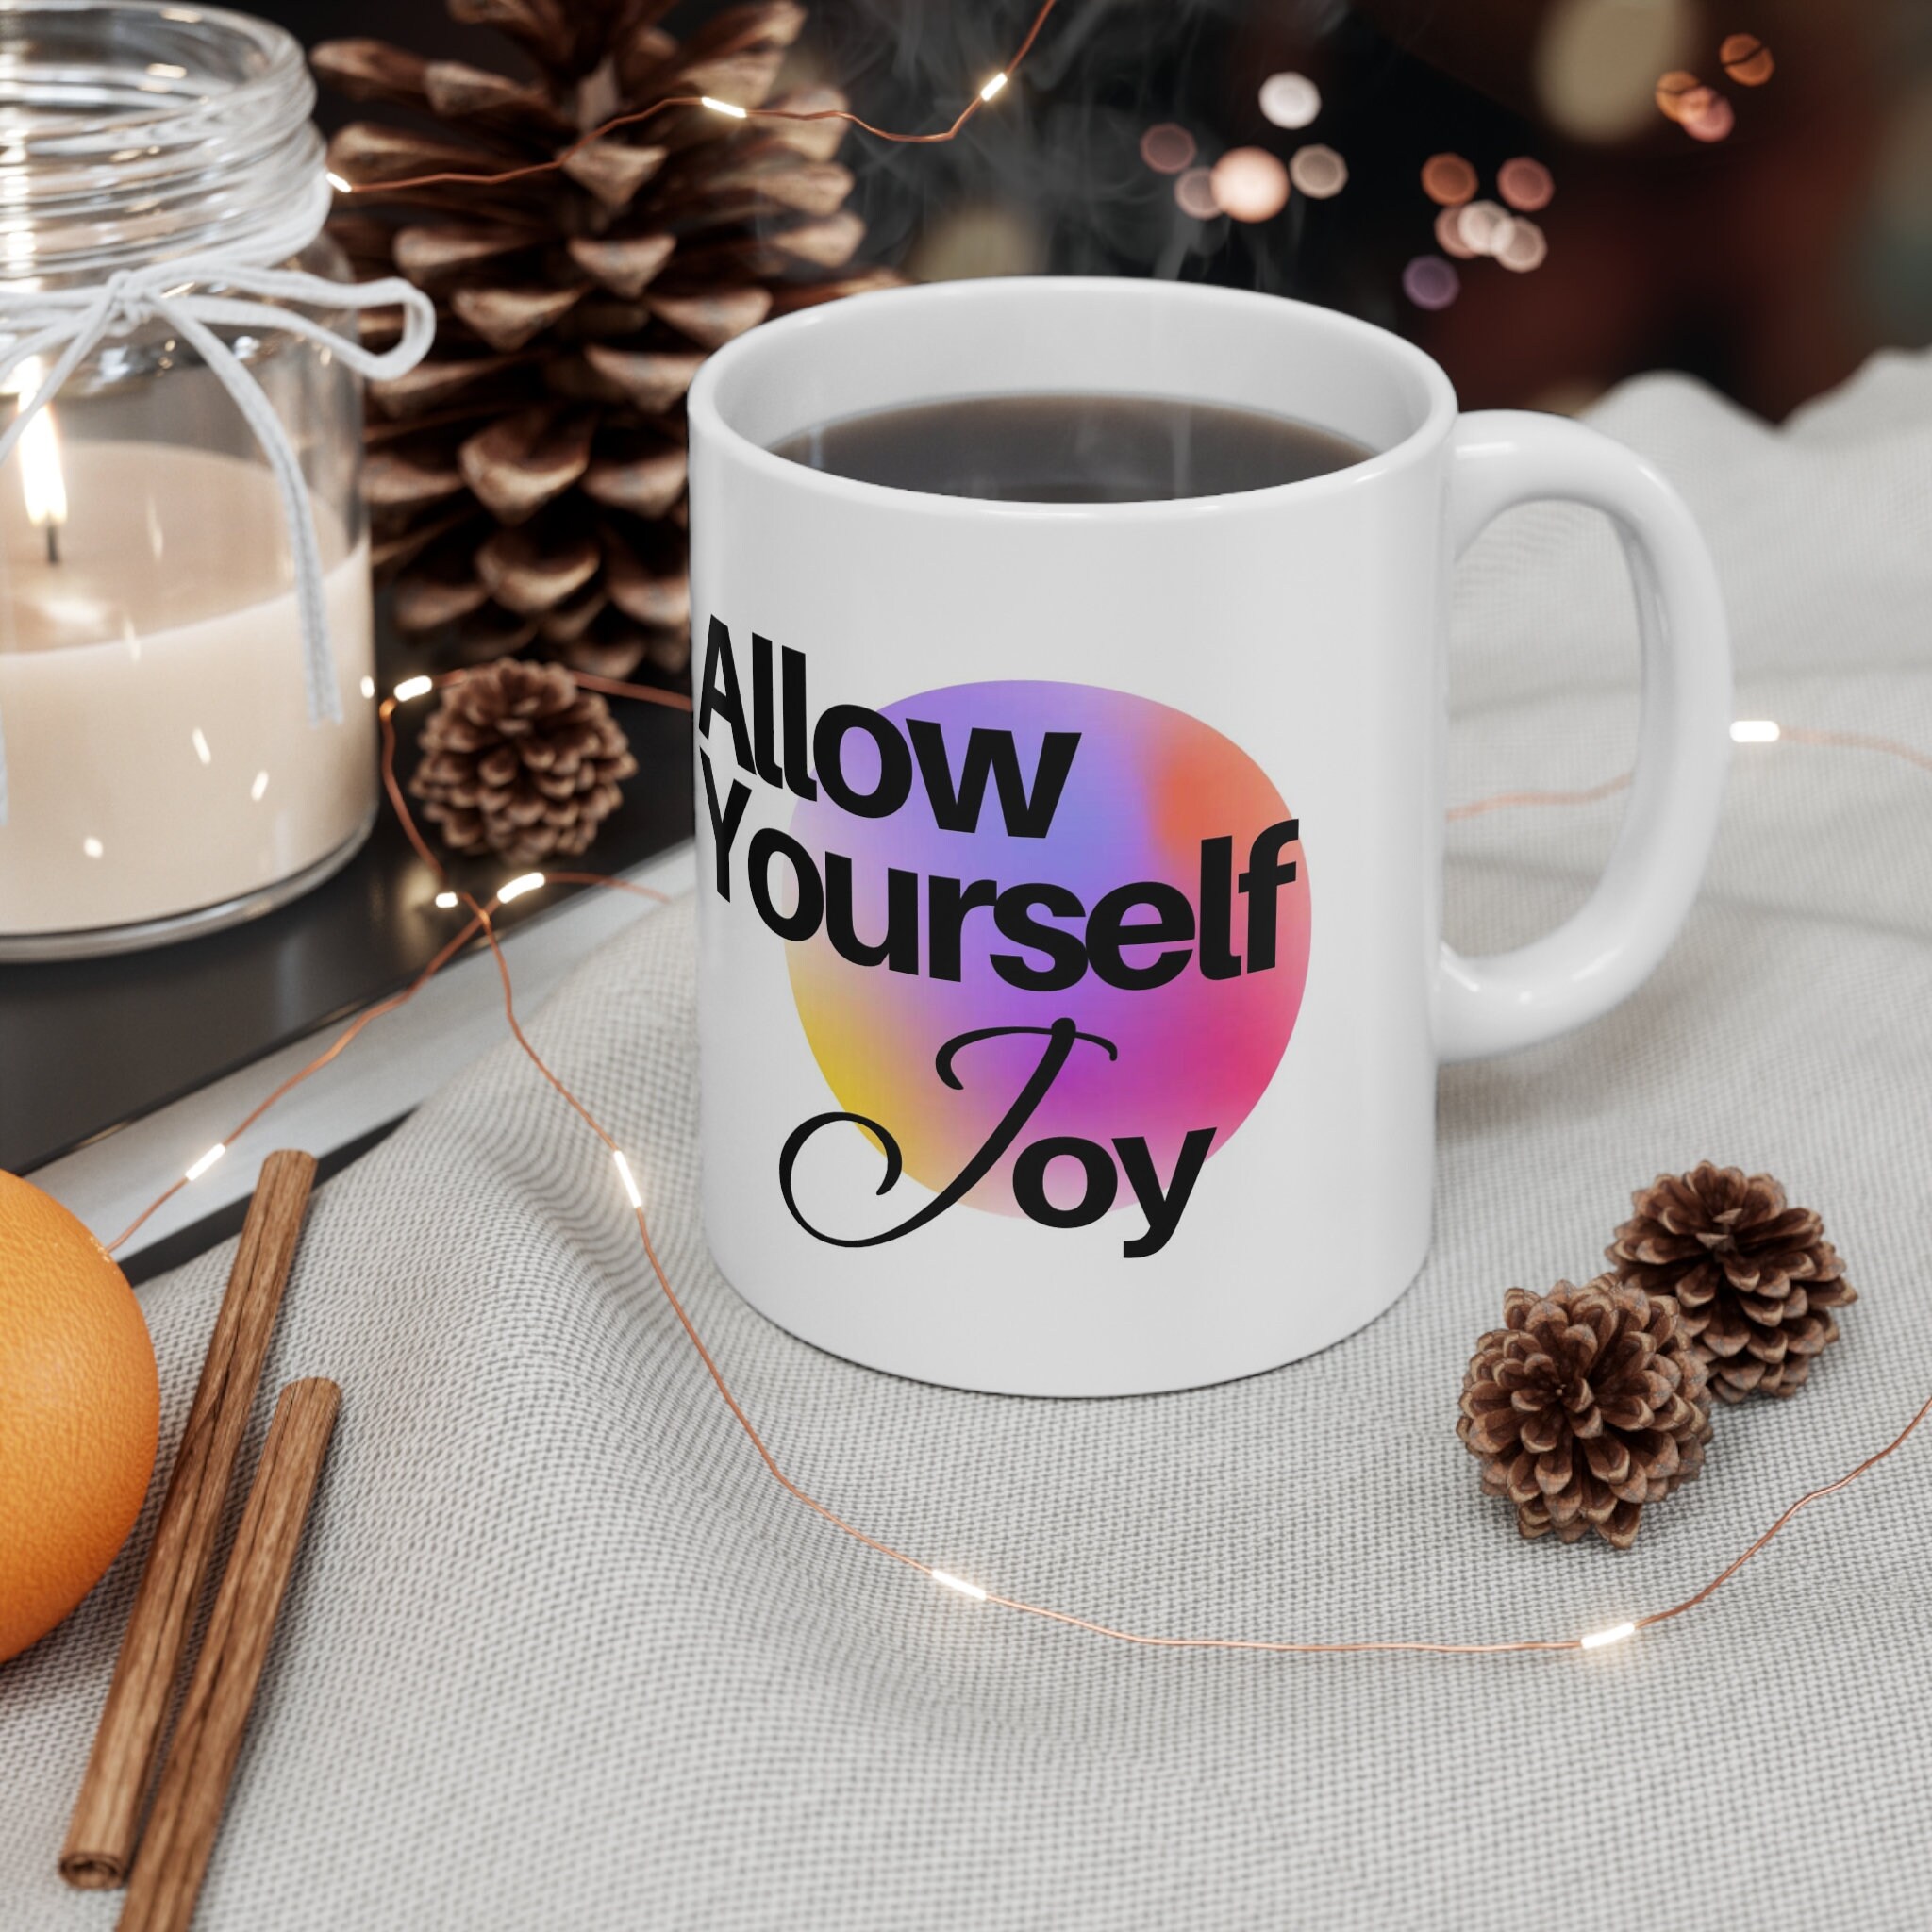 Allow Yourself Joy Mug 